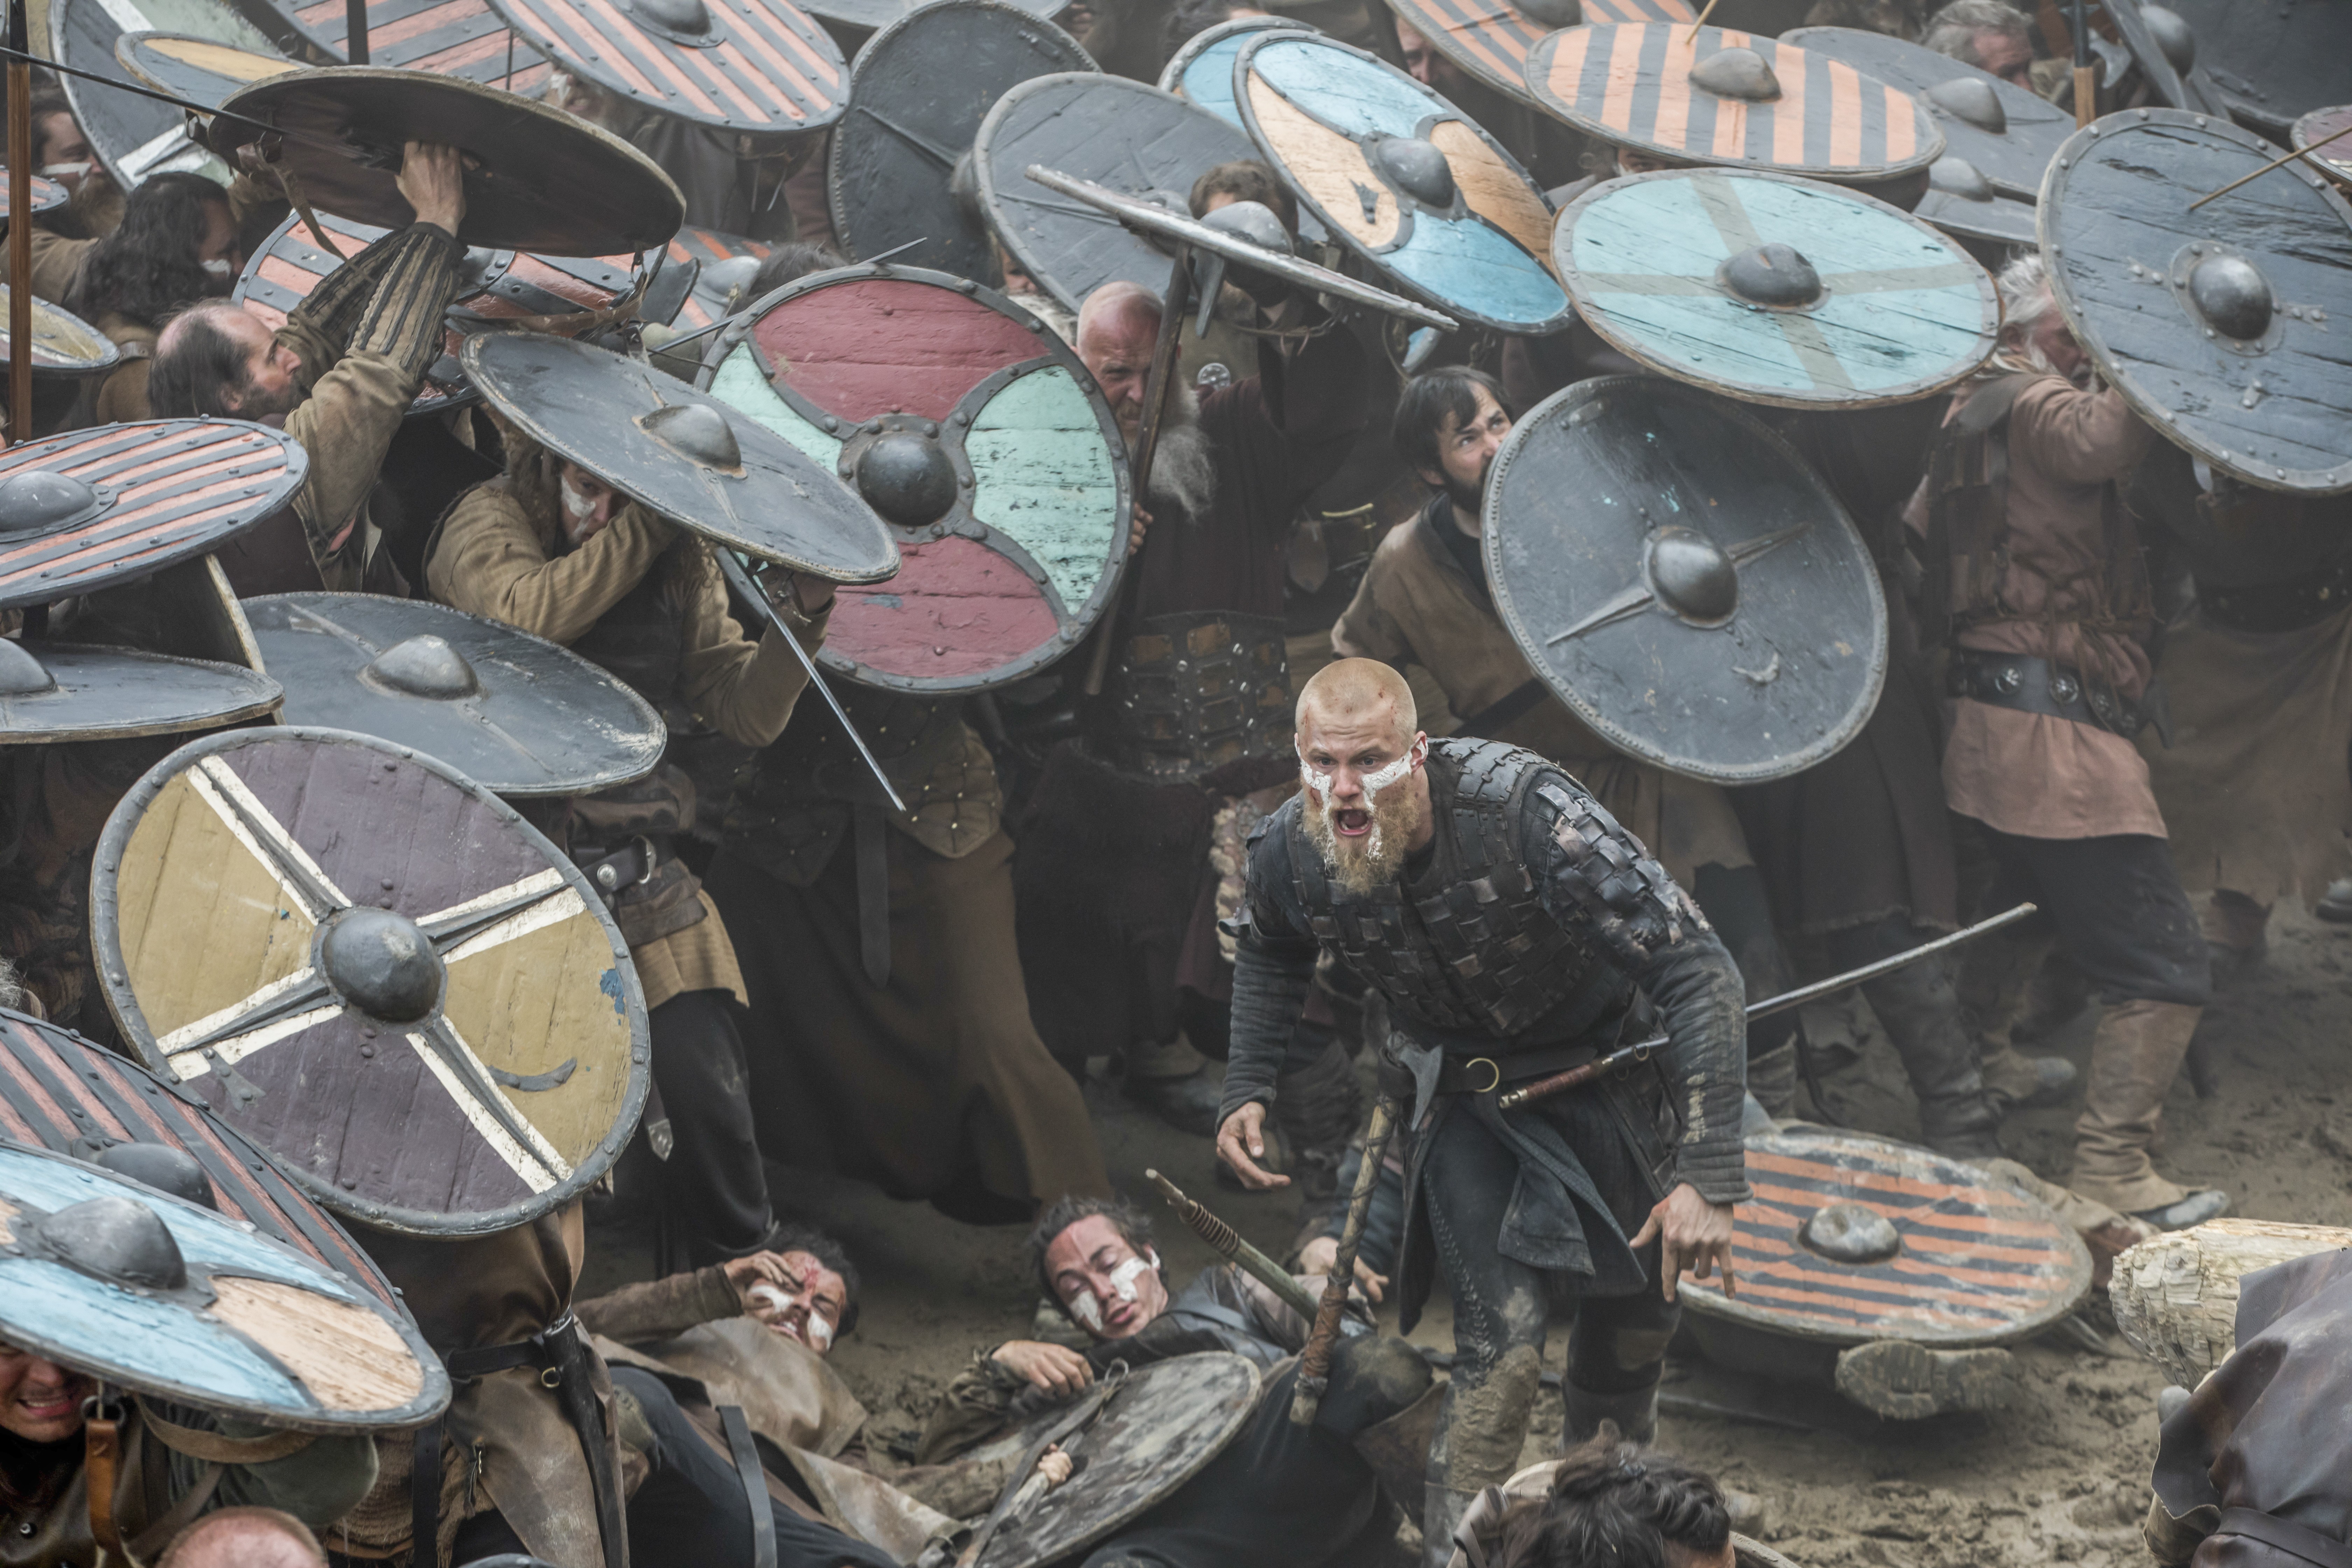 Vikings season 6 part 2: How was Bjorn Ironside's body preserved